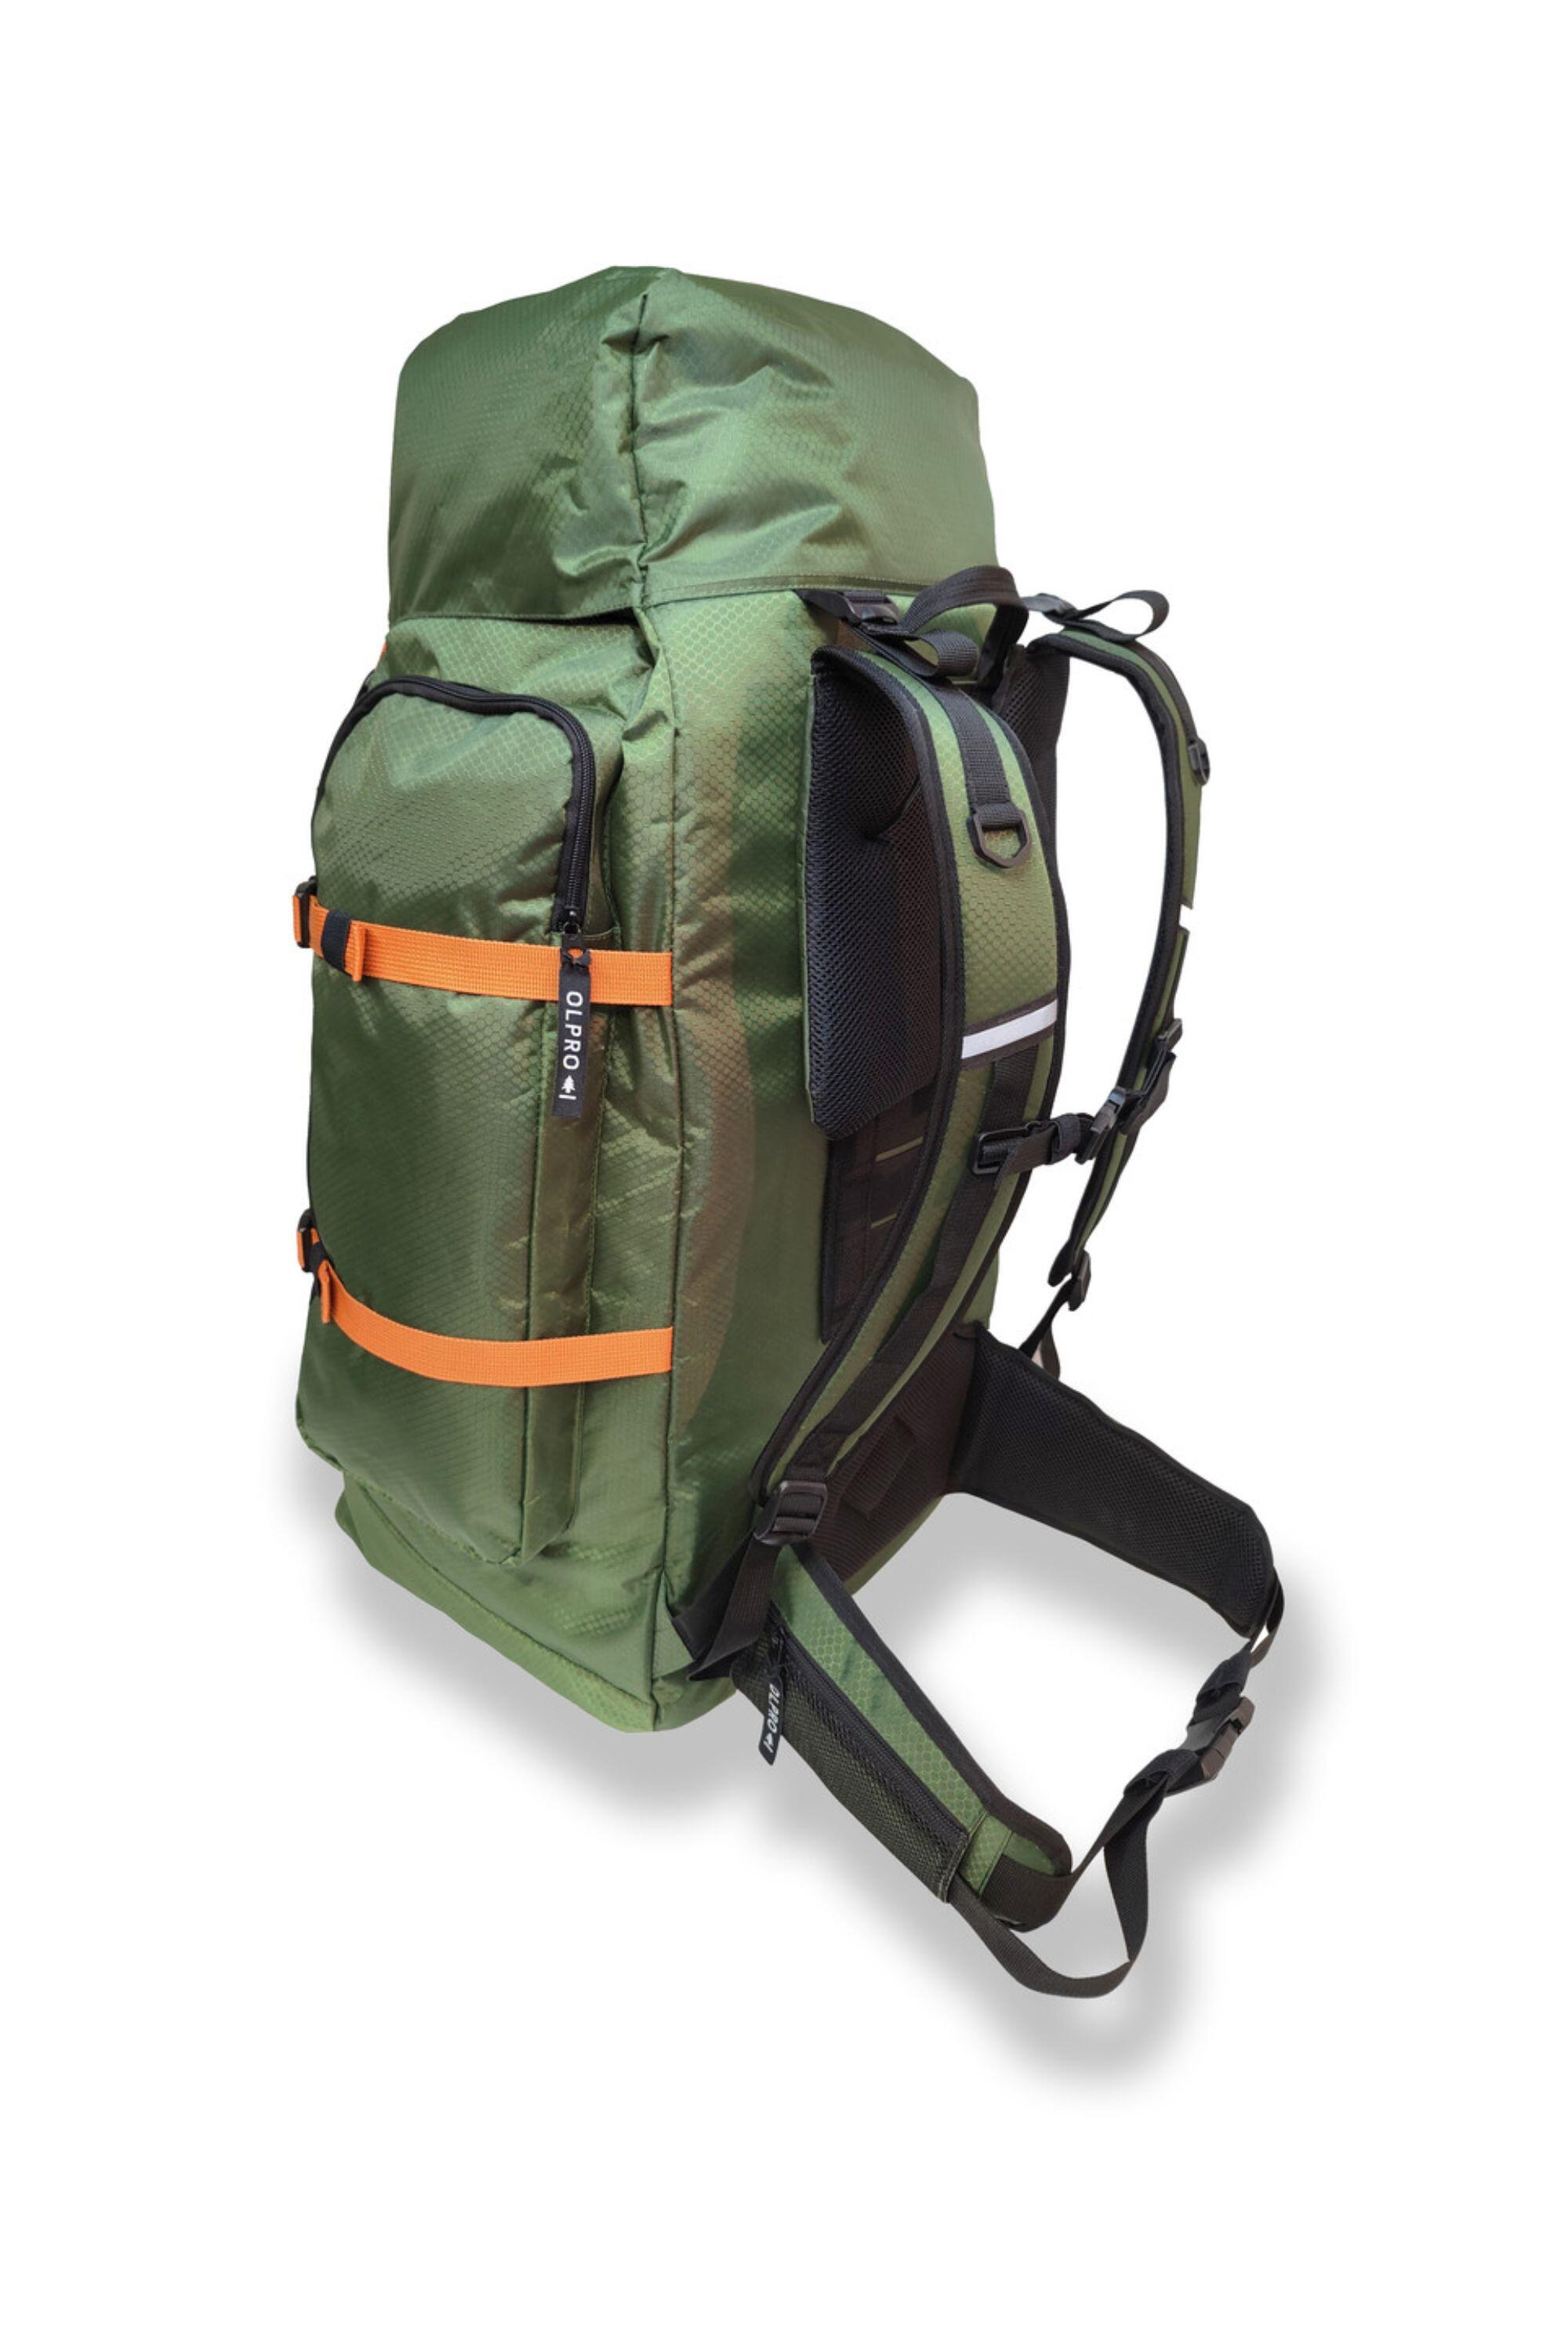 OLPRO 65L Rucksack Bag Green 4/4